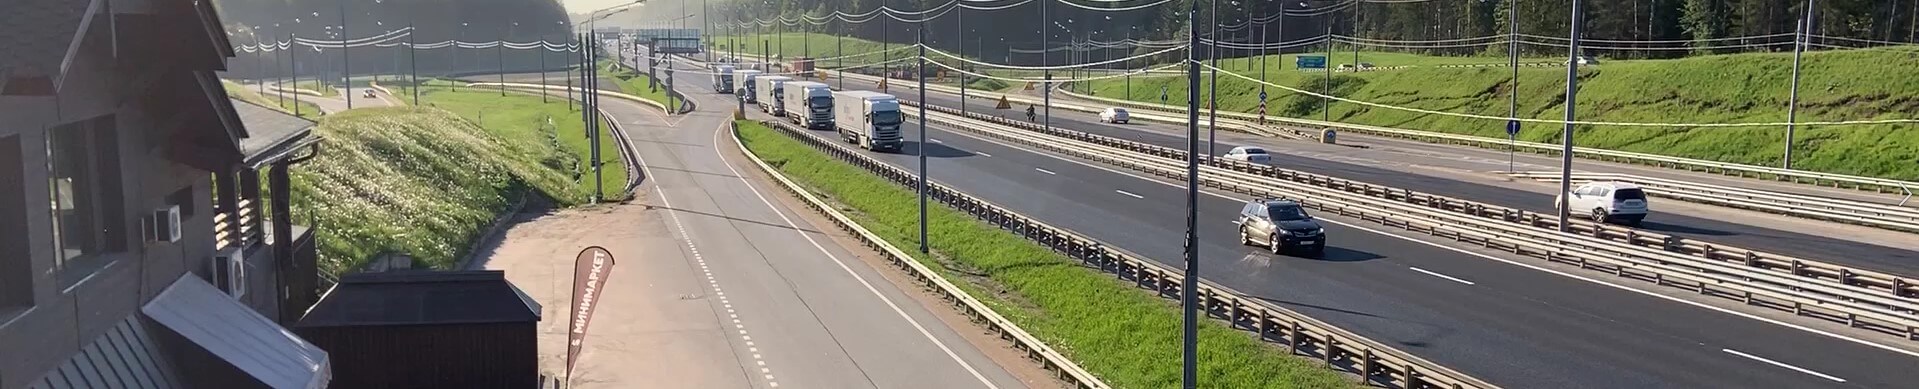 ALEV-TRANS trucks on the highway